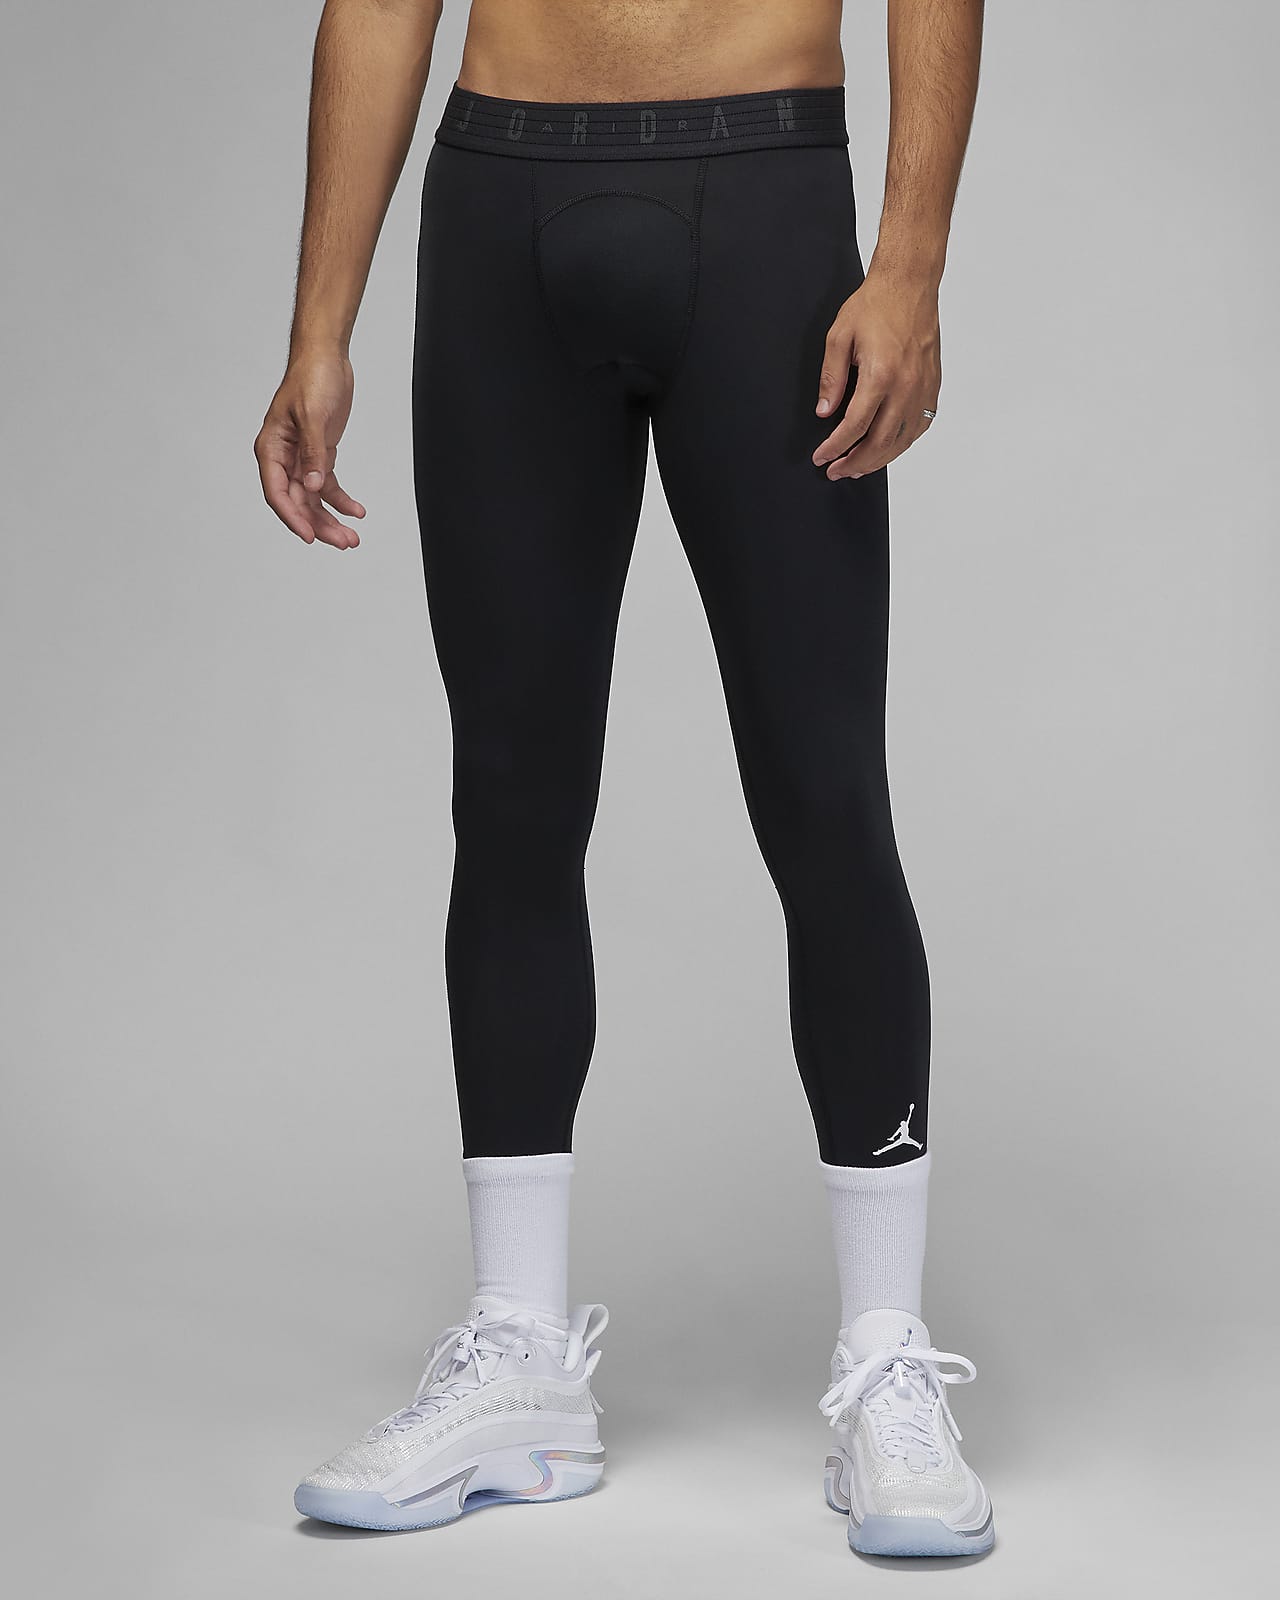 Football Tights & Leggings. Nike ID